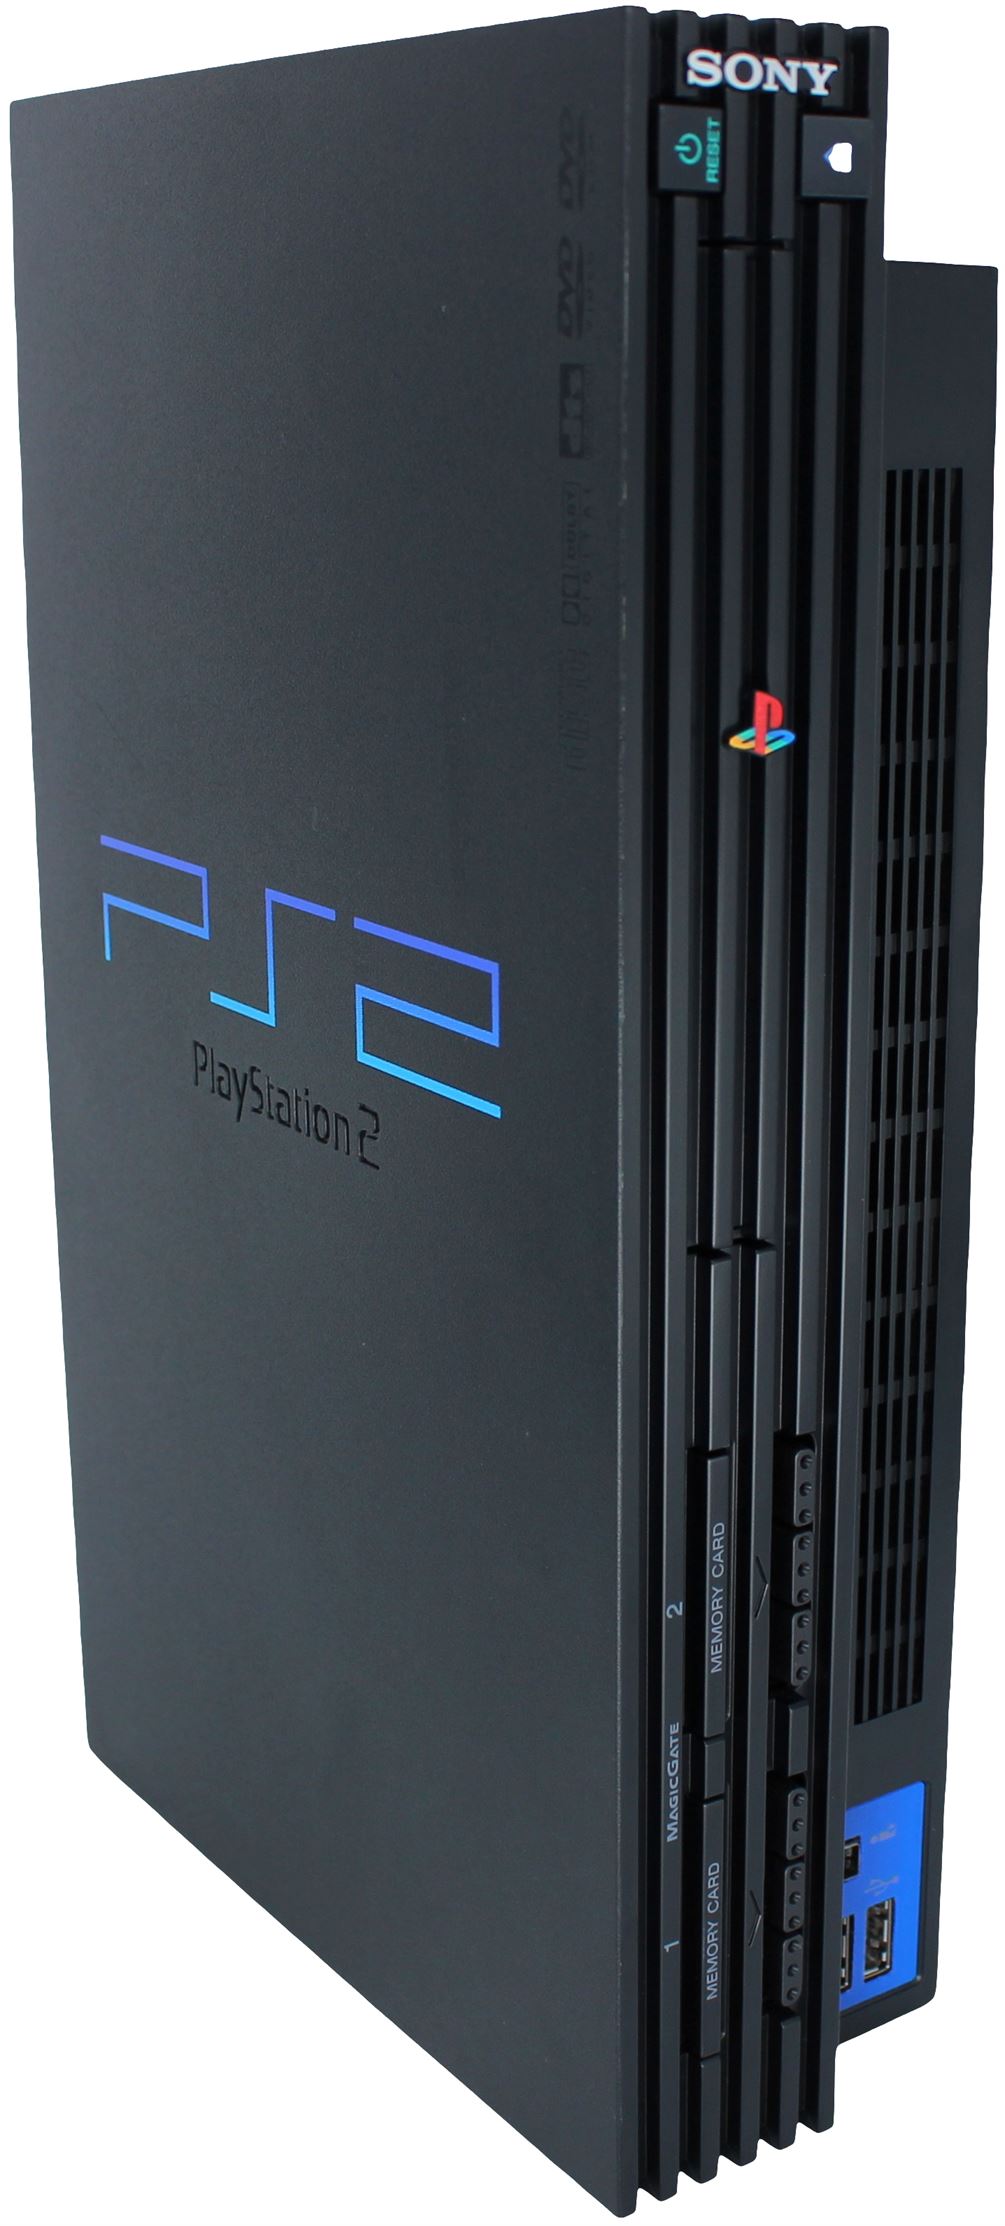 Sony PlayStation 2 (PS2) Single-Player Bundle